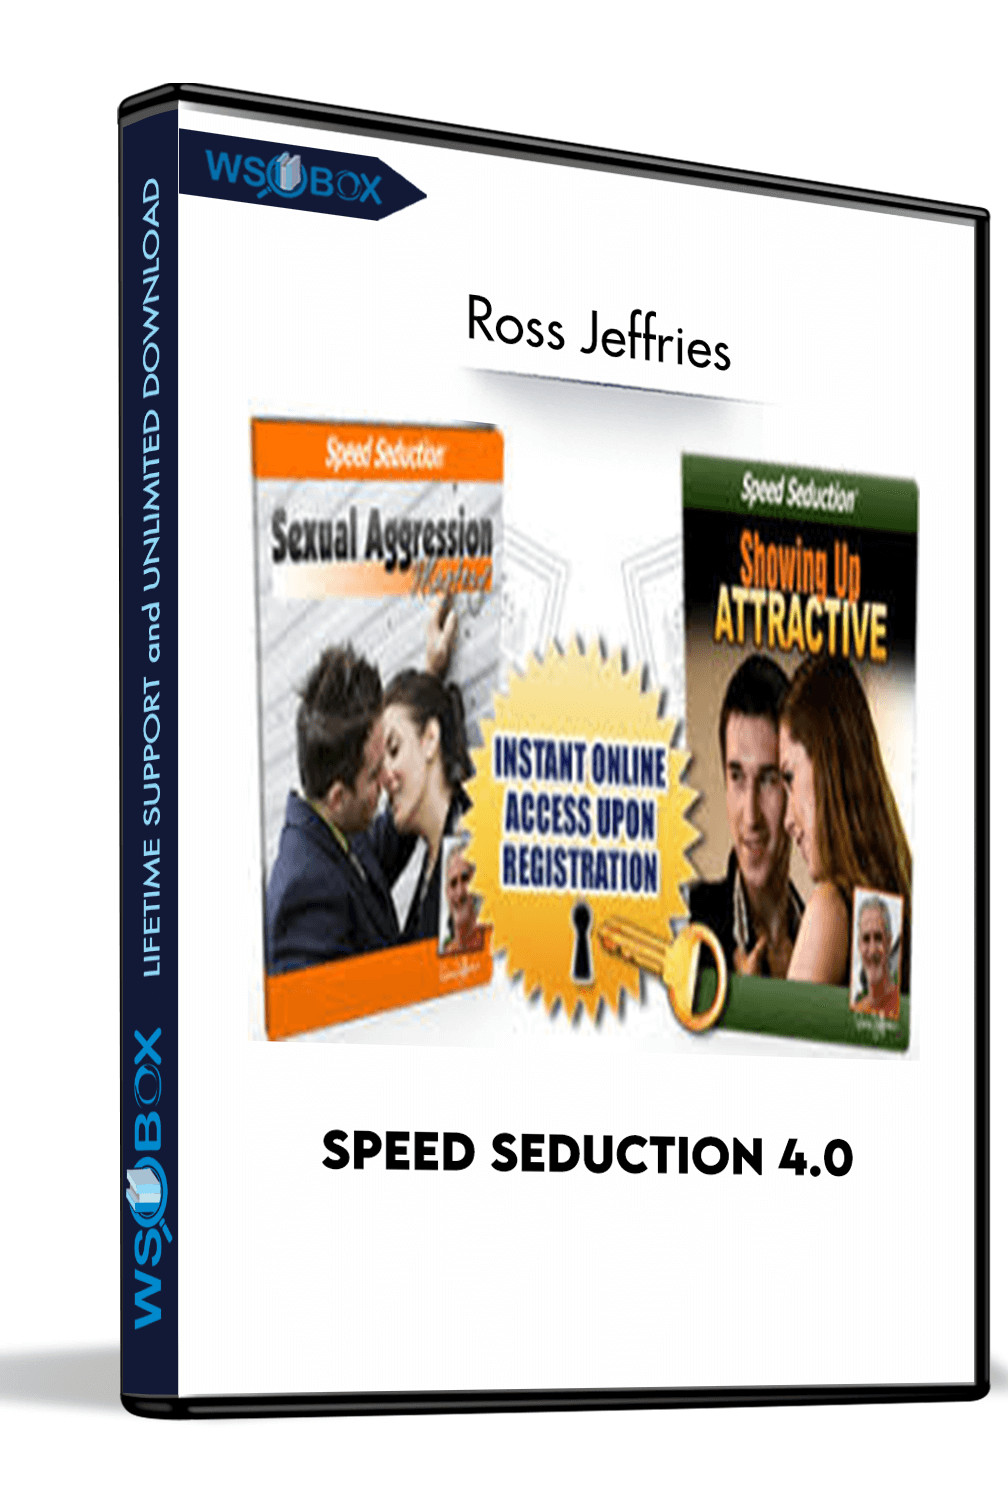 speed-seduction-40-ross-jeffries